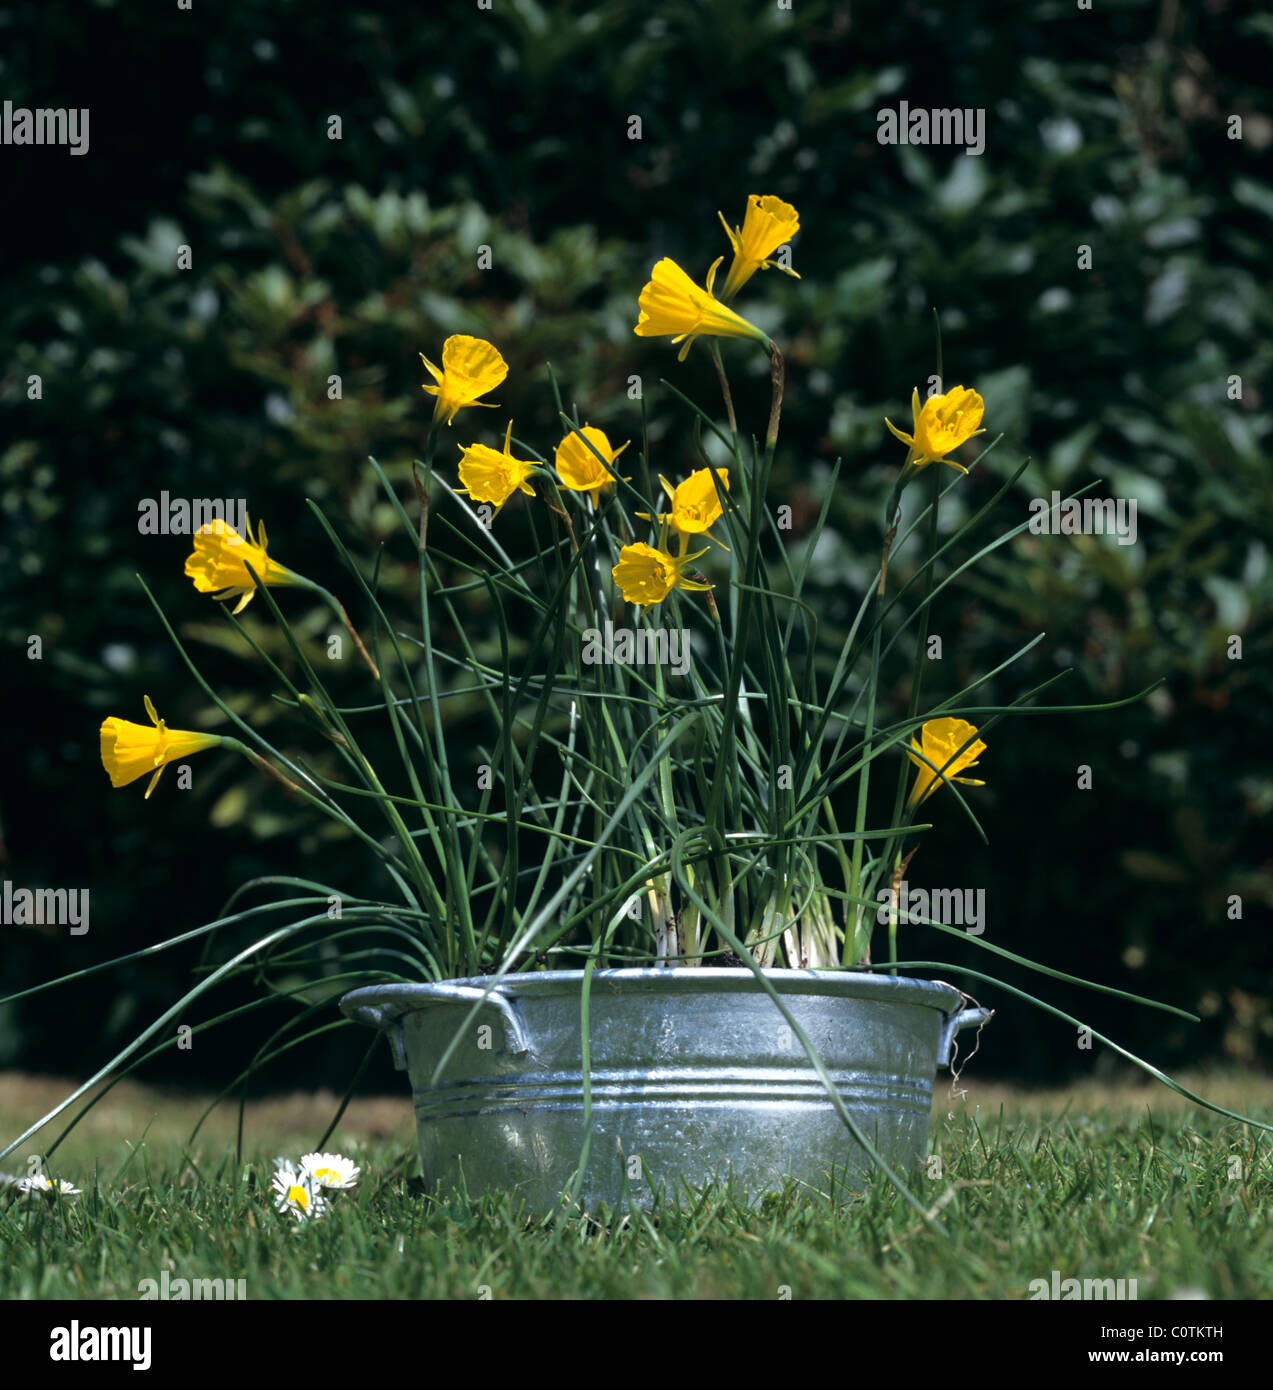 Narcissus bulbocodium fioritura in un contenitore zincato Foto Stock